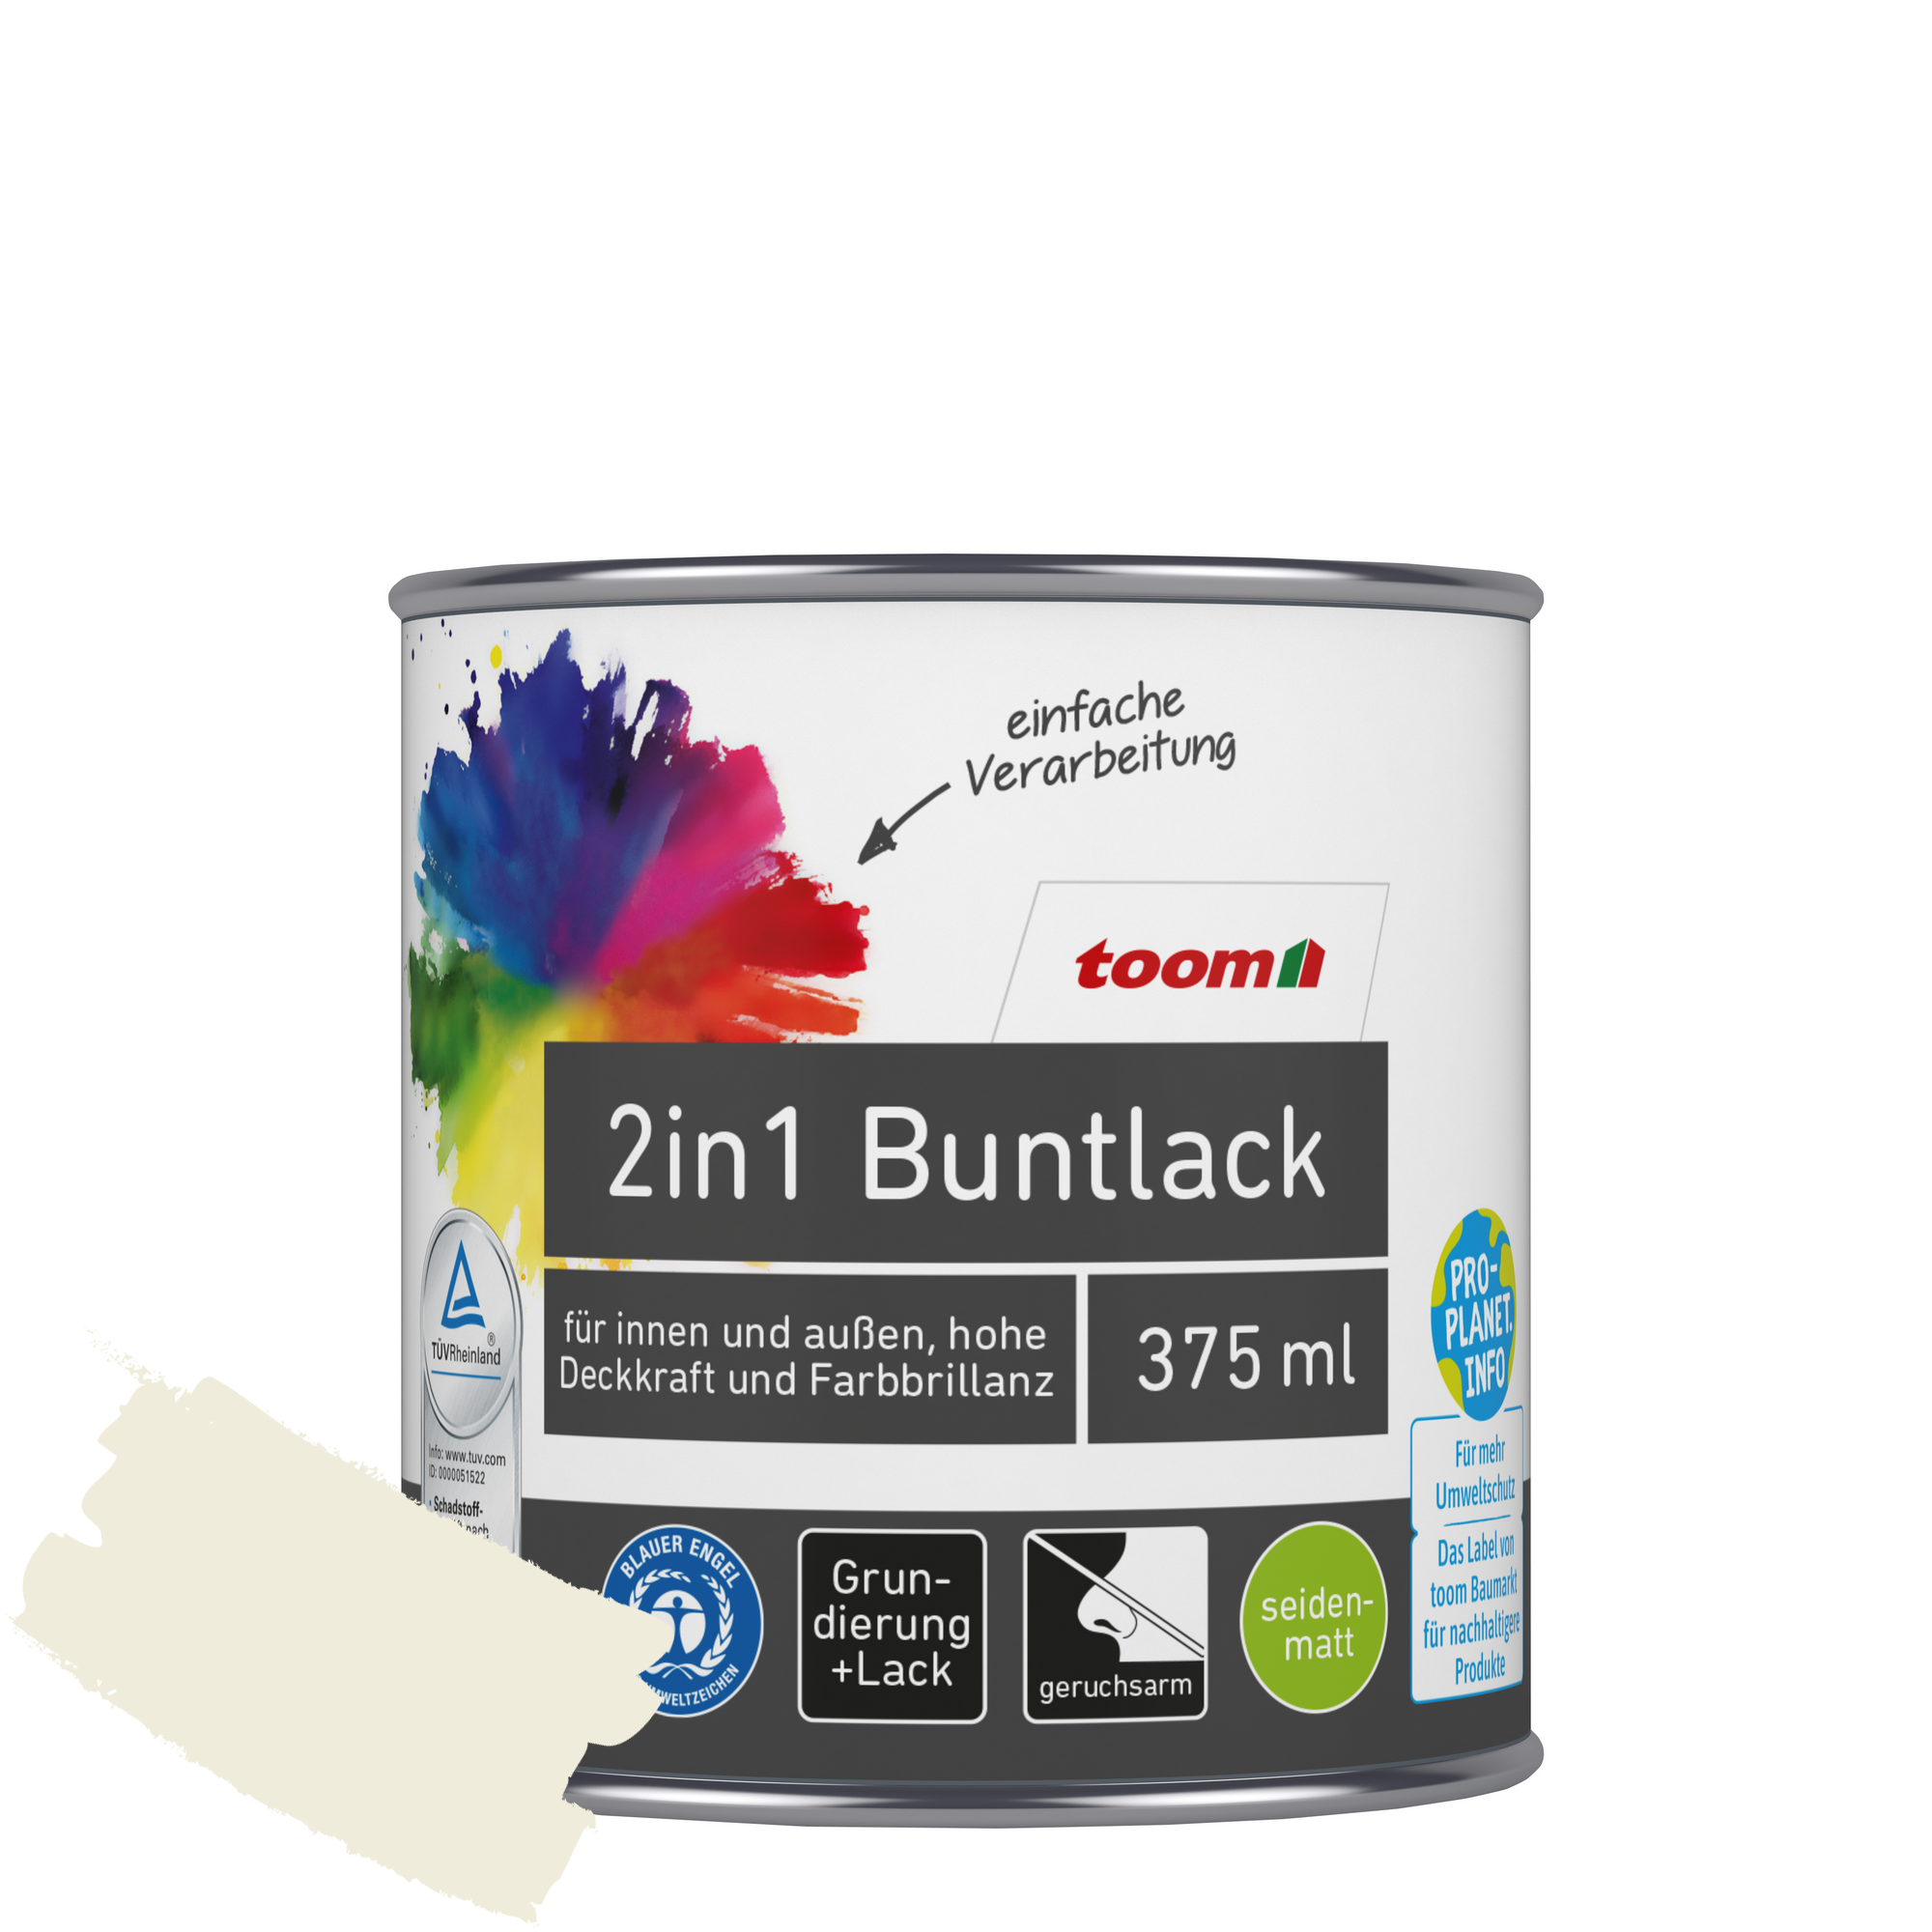 2in1 Buntlack 'Eisblume' reinweiß seidenmatt 375 ml + product picture